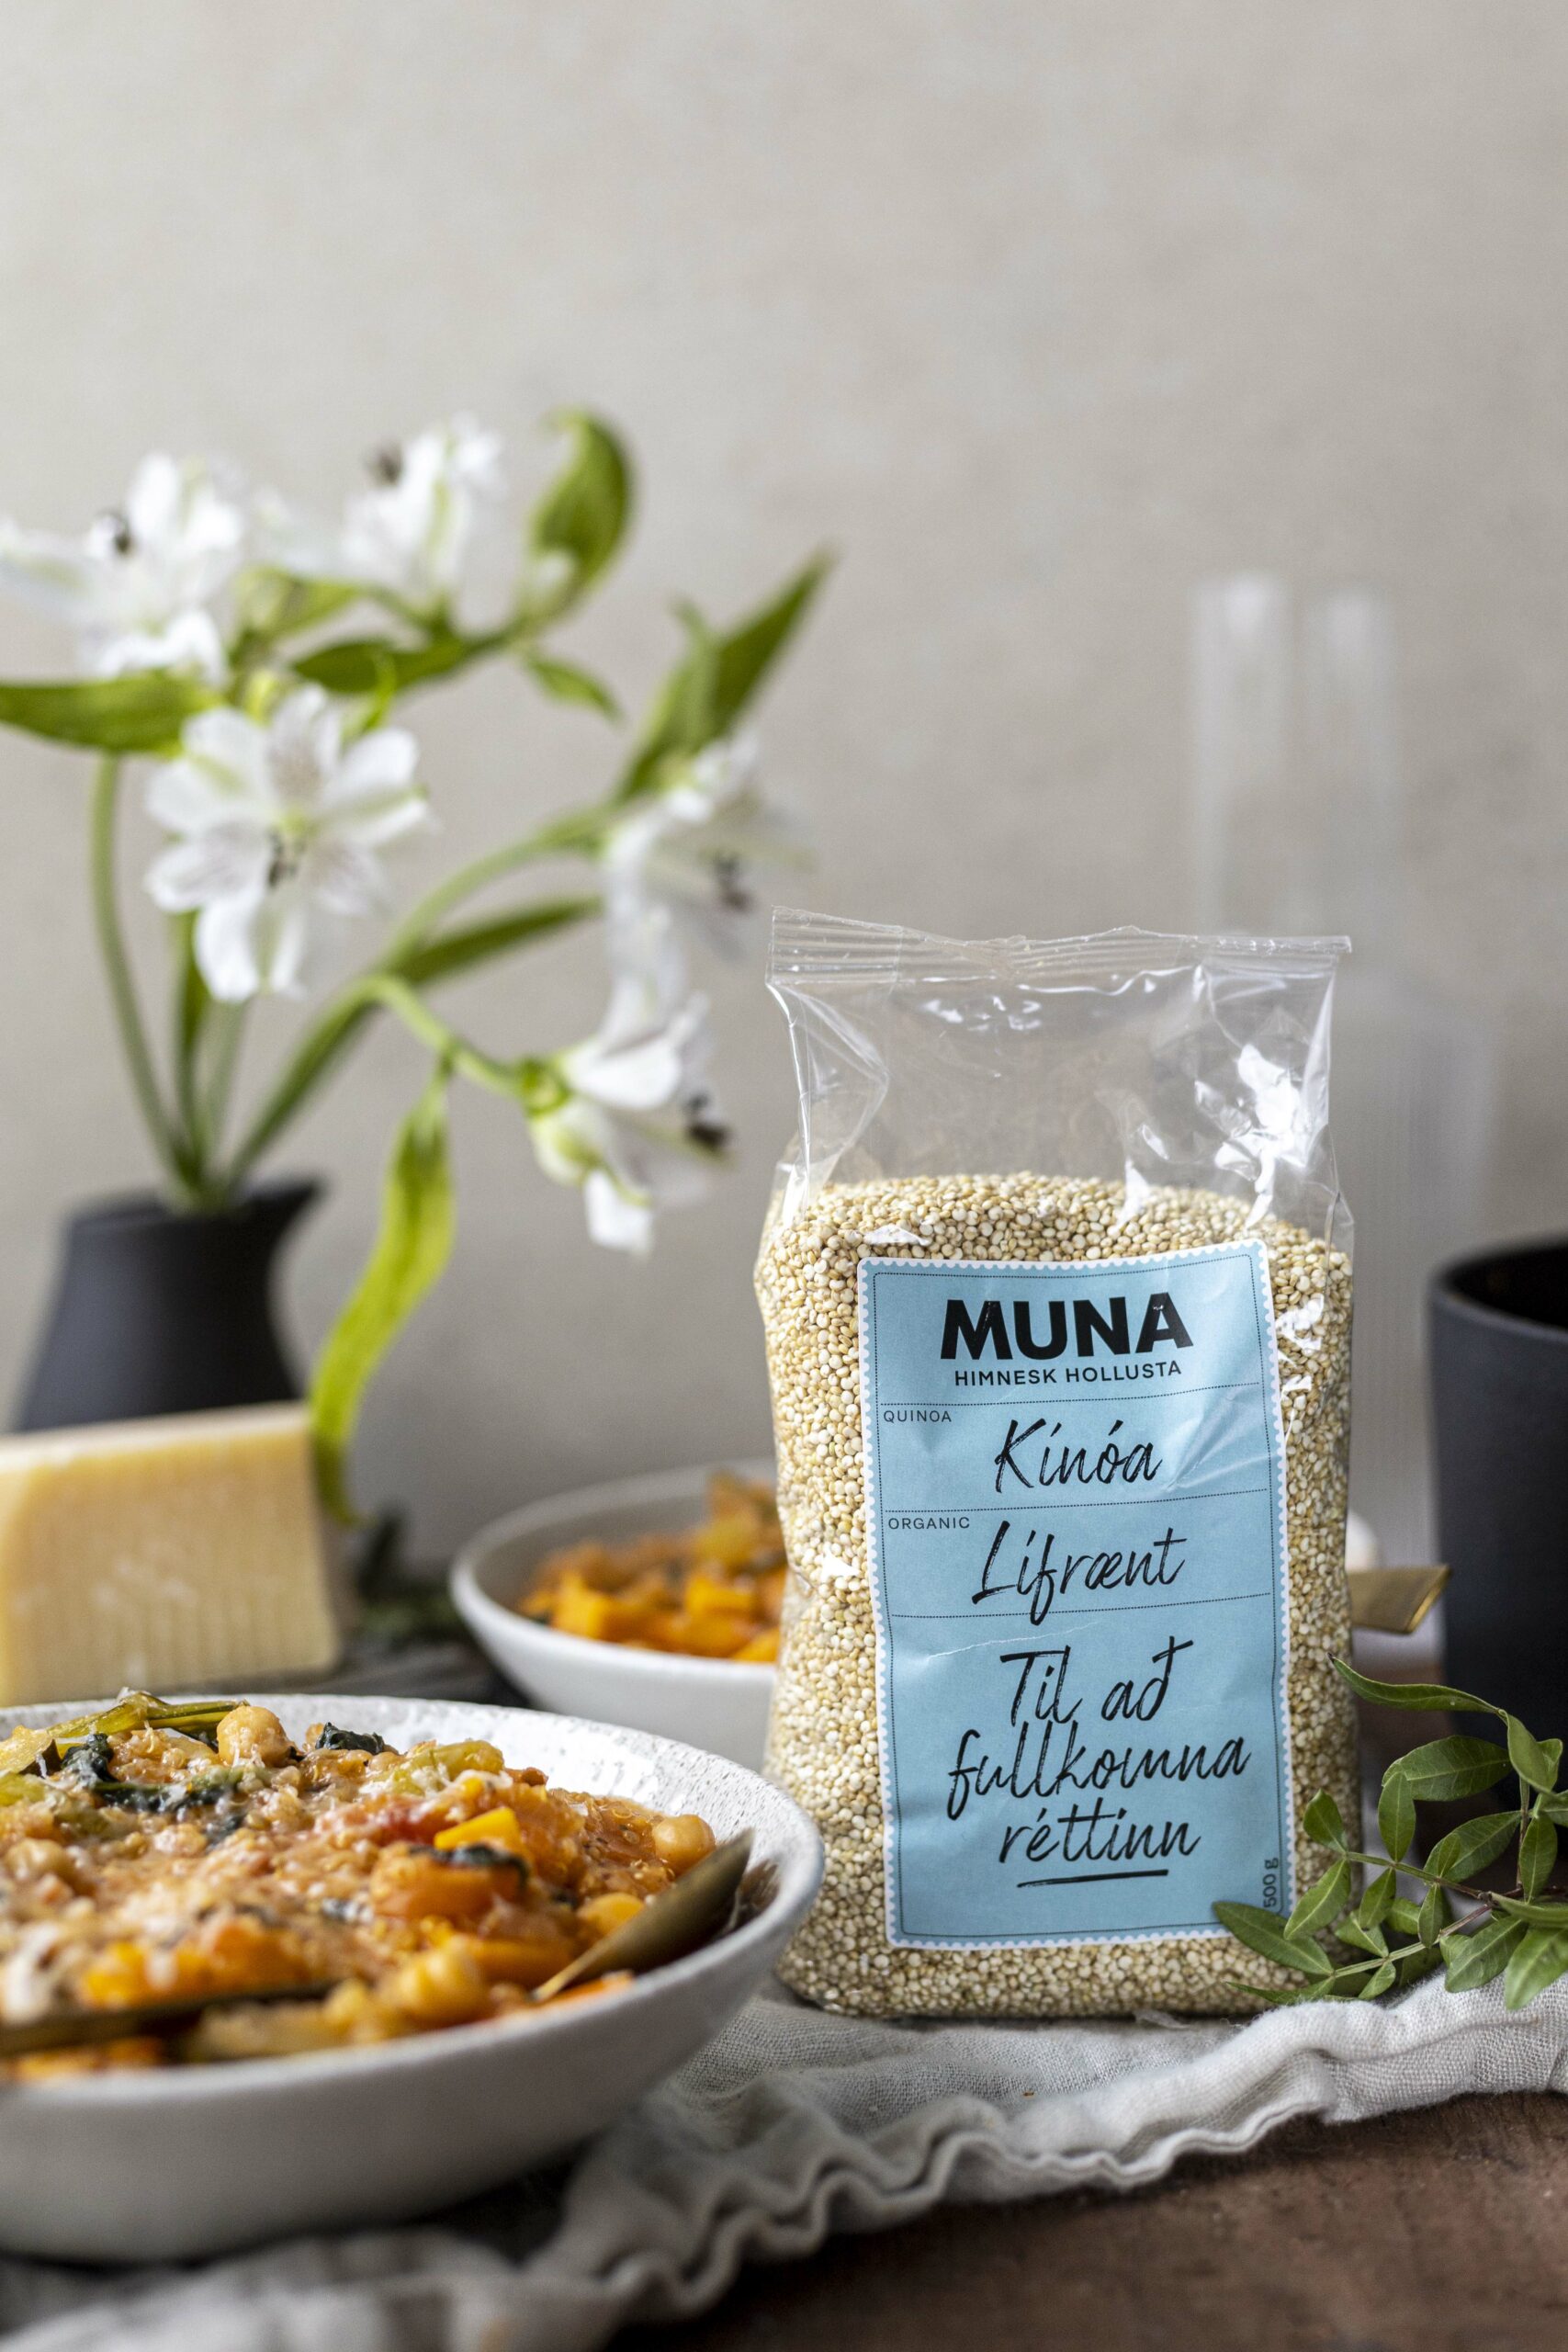 Quinoa grænmetissúpa